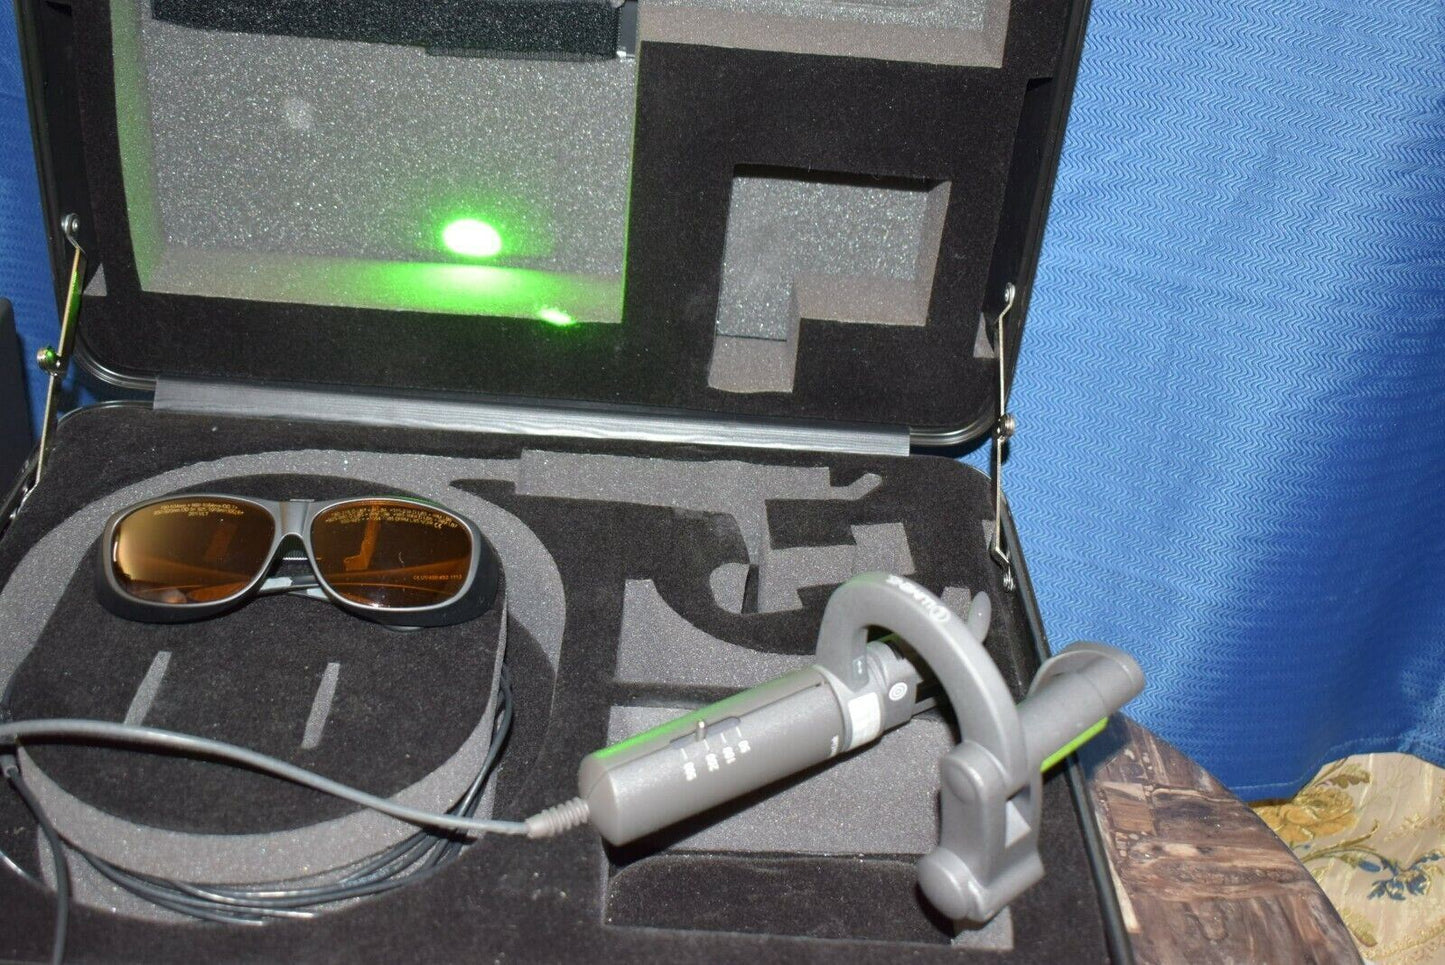 Lumenis Novus Spectra 532nm Green laser with Haag Streit adapter